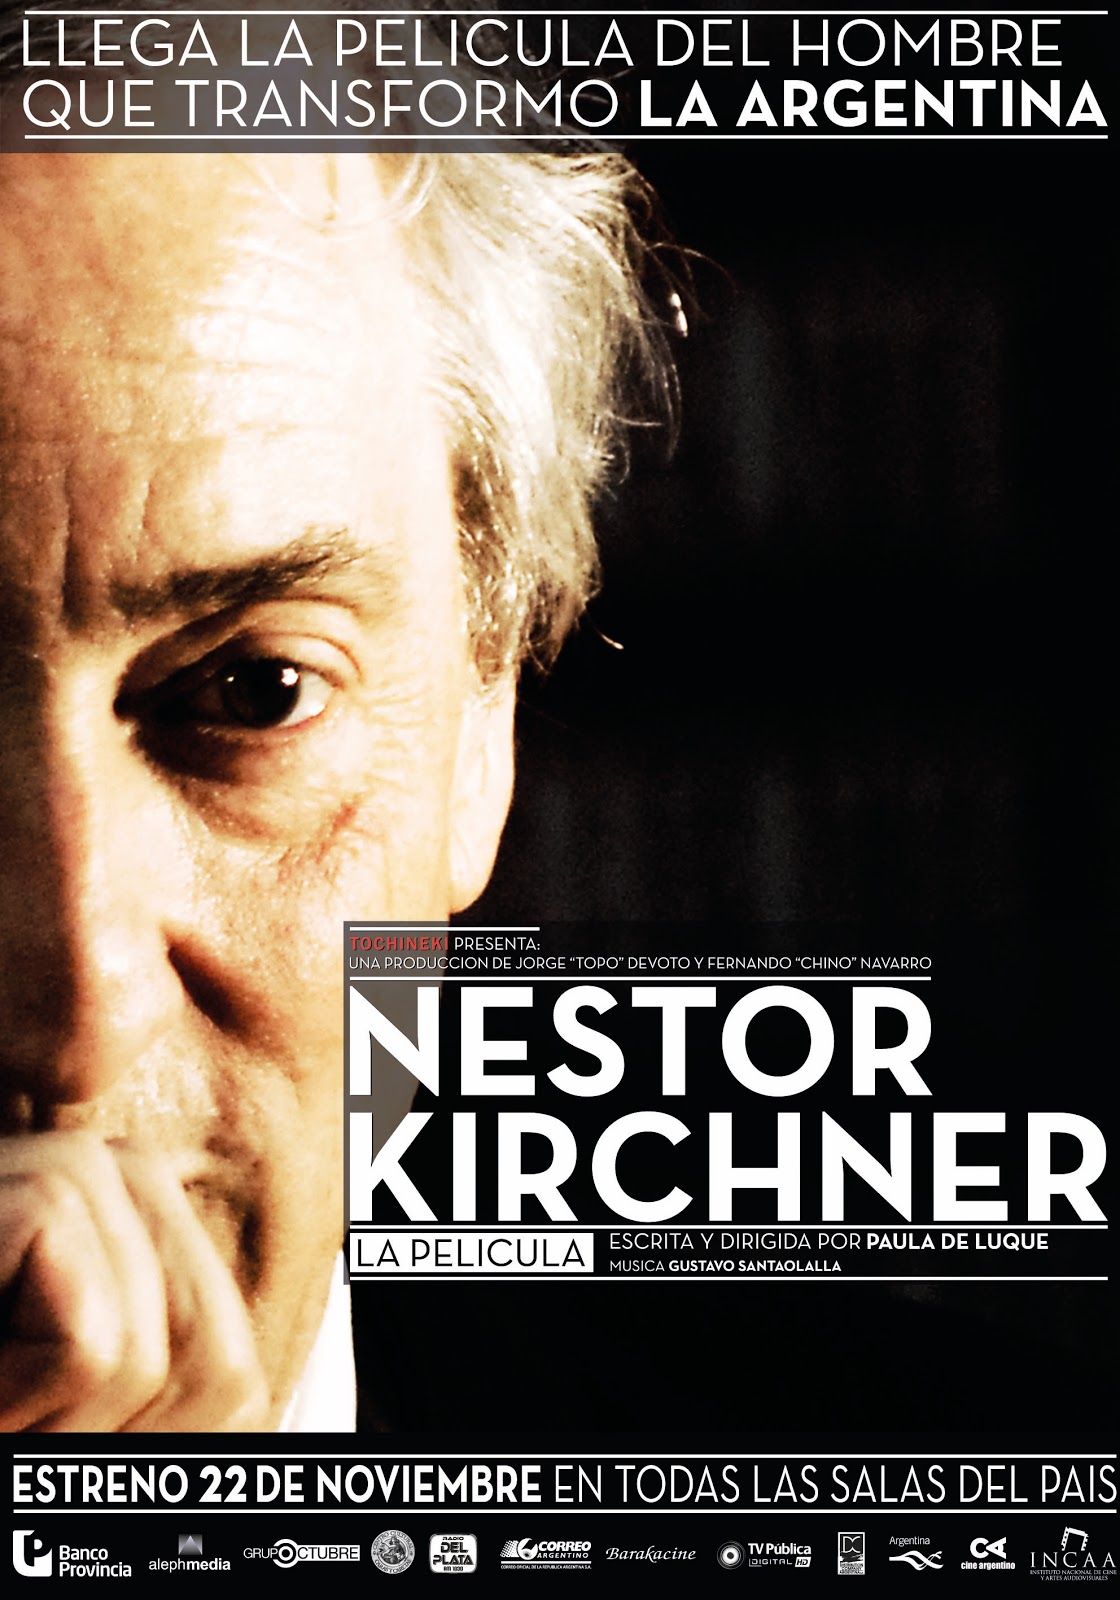 Nestor Kirchner, la pelicula. Por Adrian Caetano